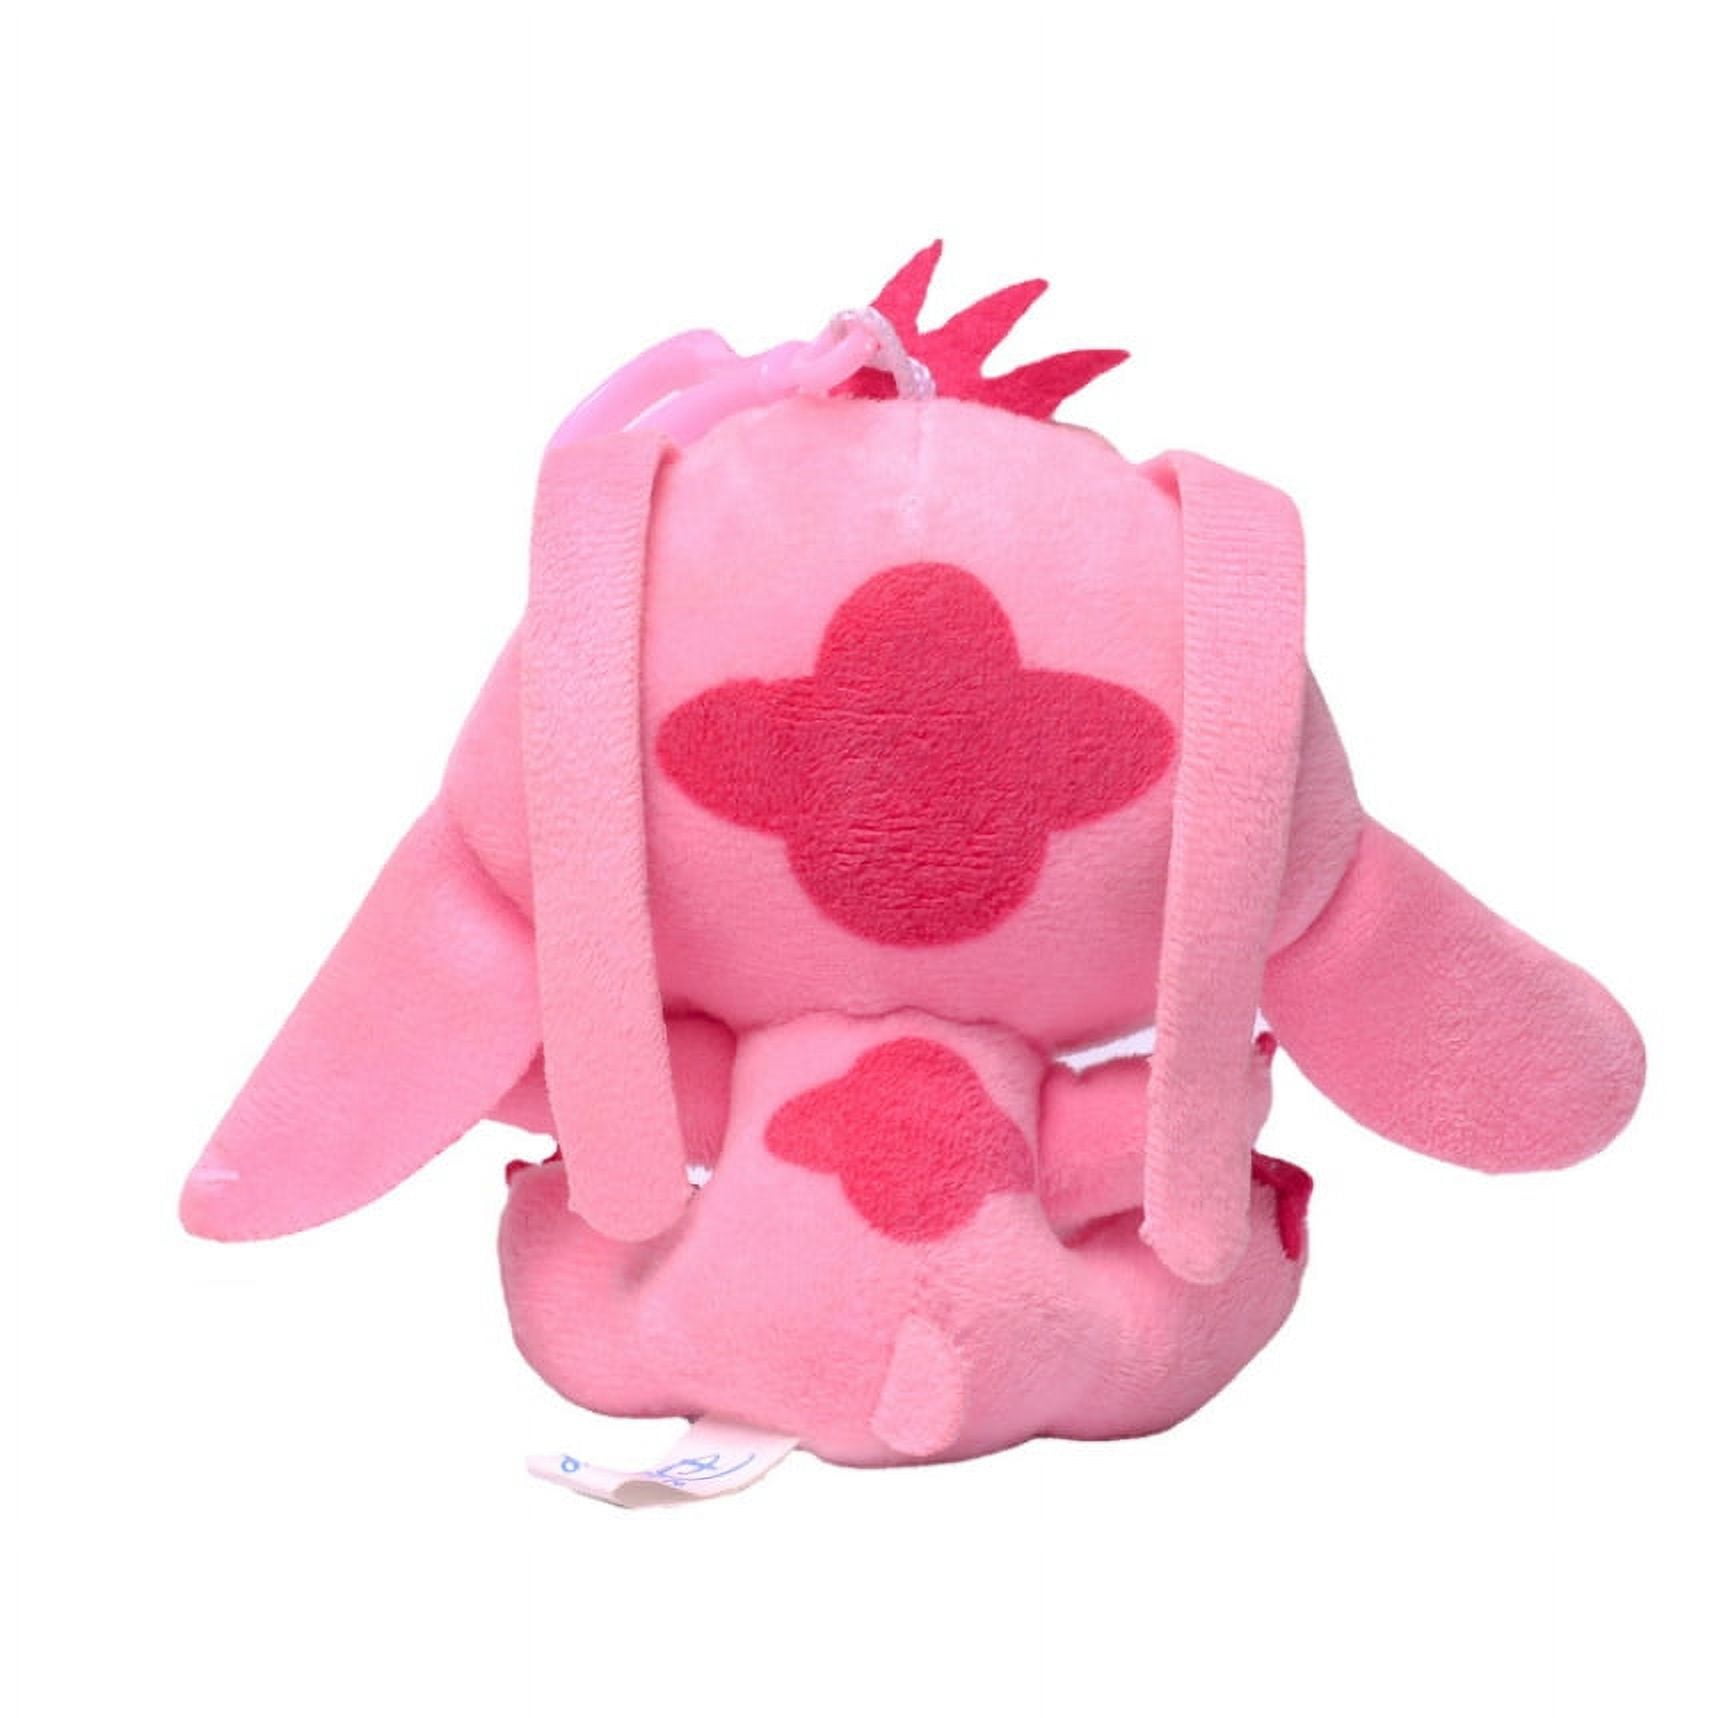 1PC Cute Stitch Plush Toys Anime Lilo Stitch Soft Stuffed Animal Dolls -  Supply Epic